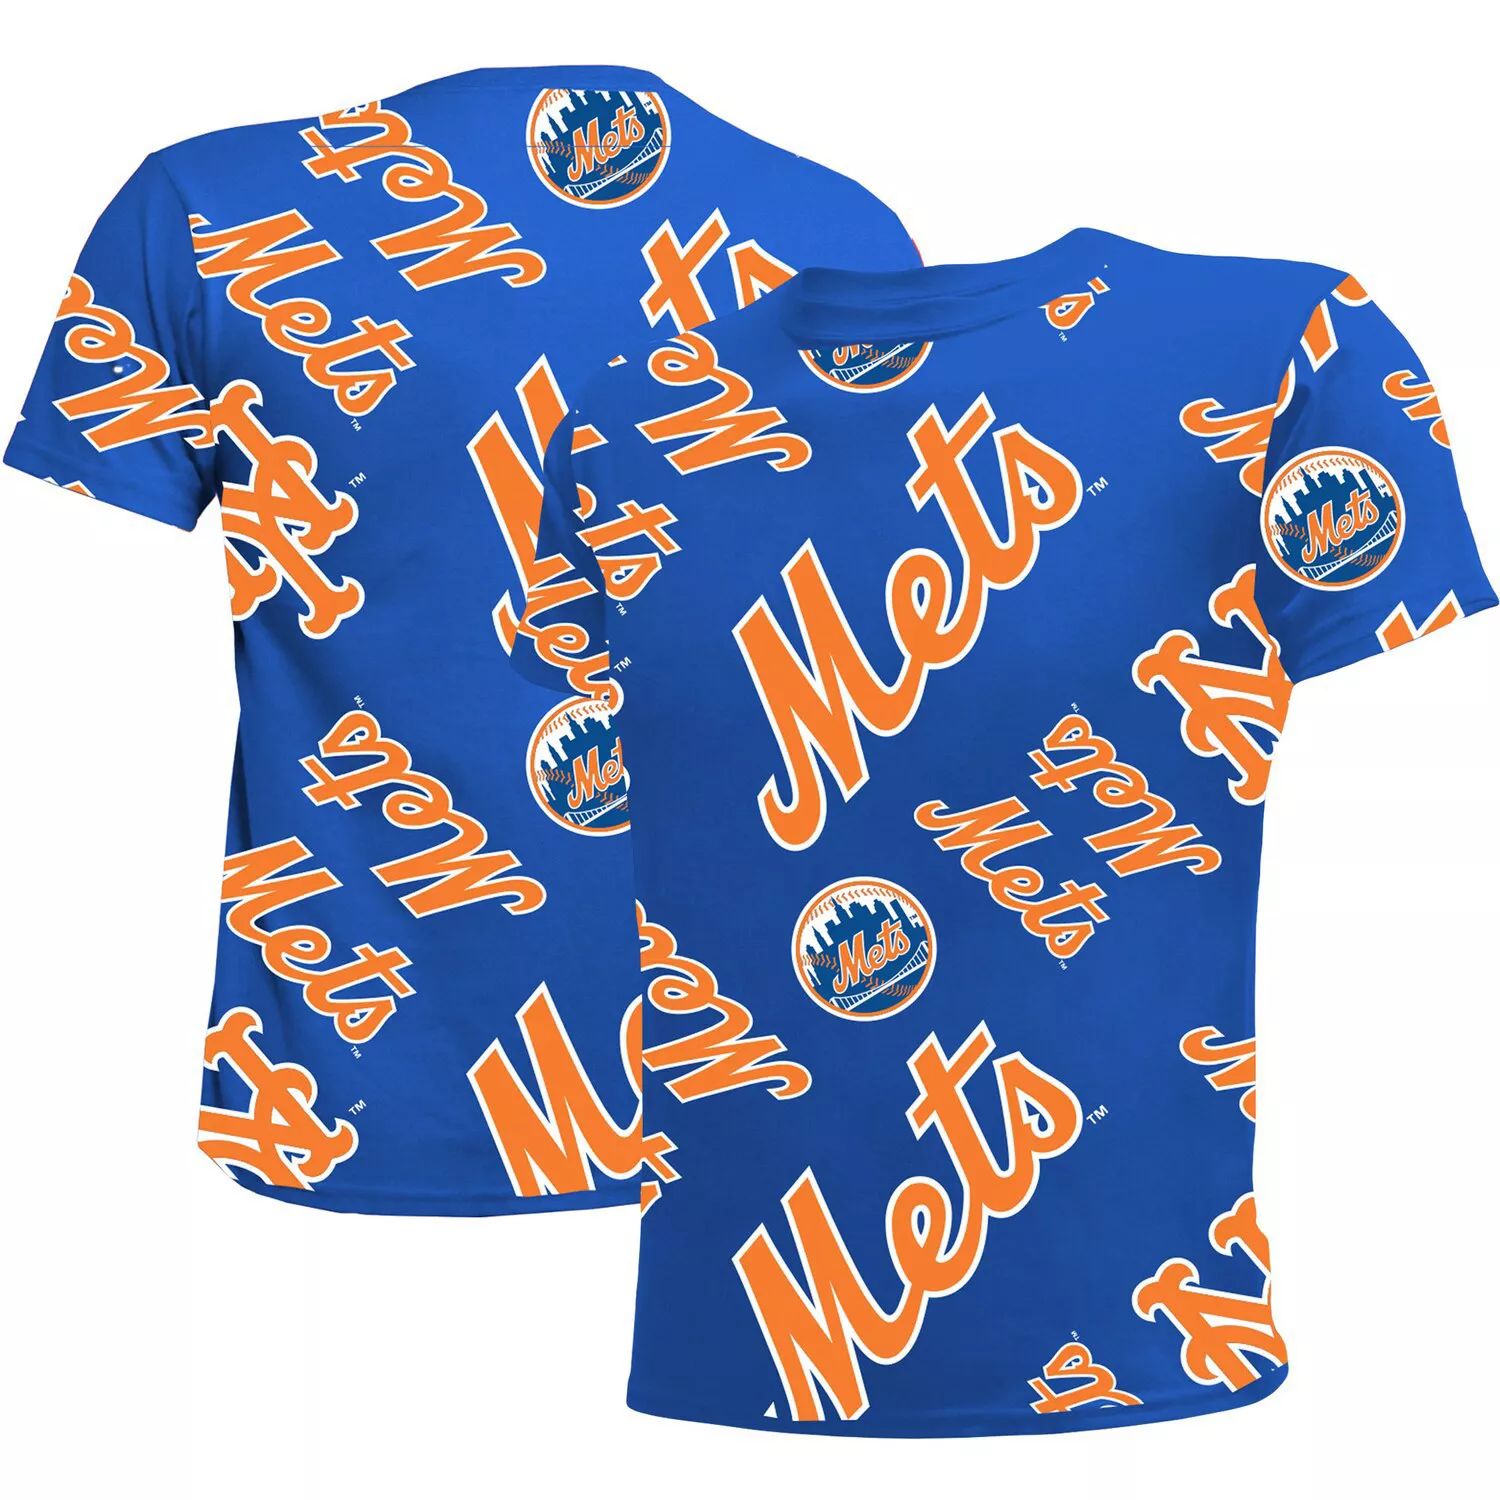 Футболка Youth Stitches Royal New York Mets Allover Team Stitches цена и фото